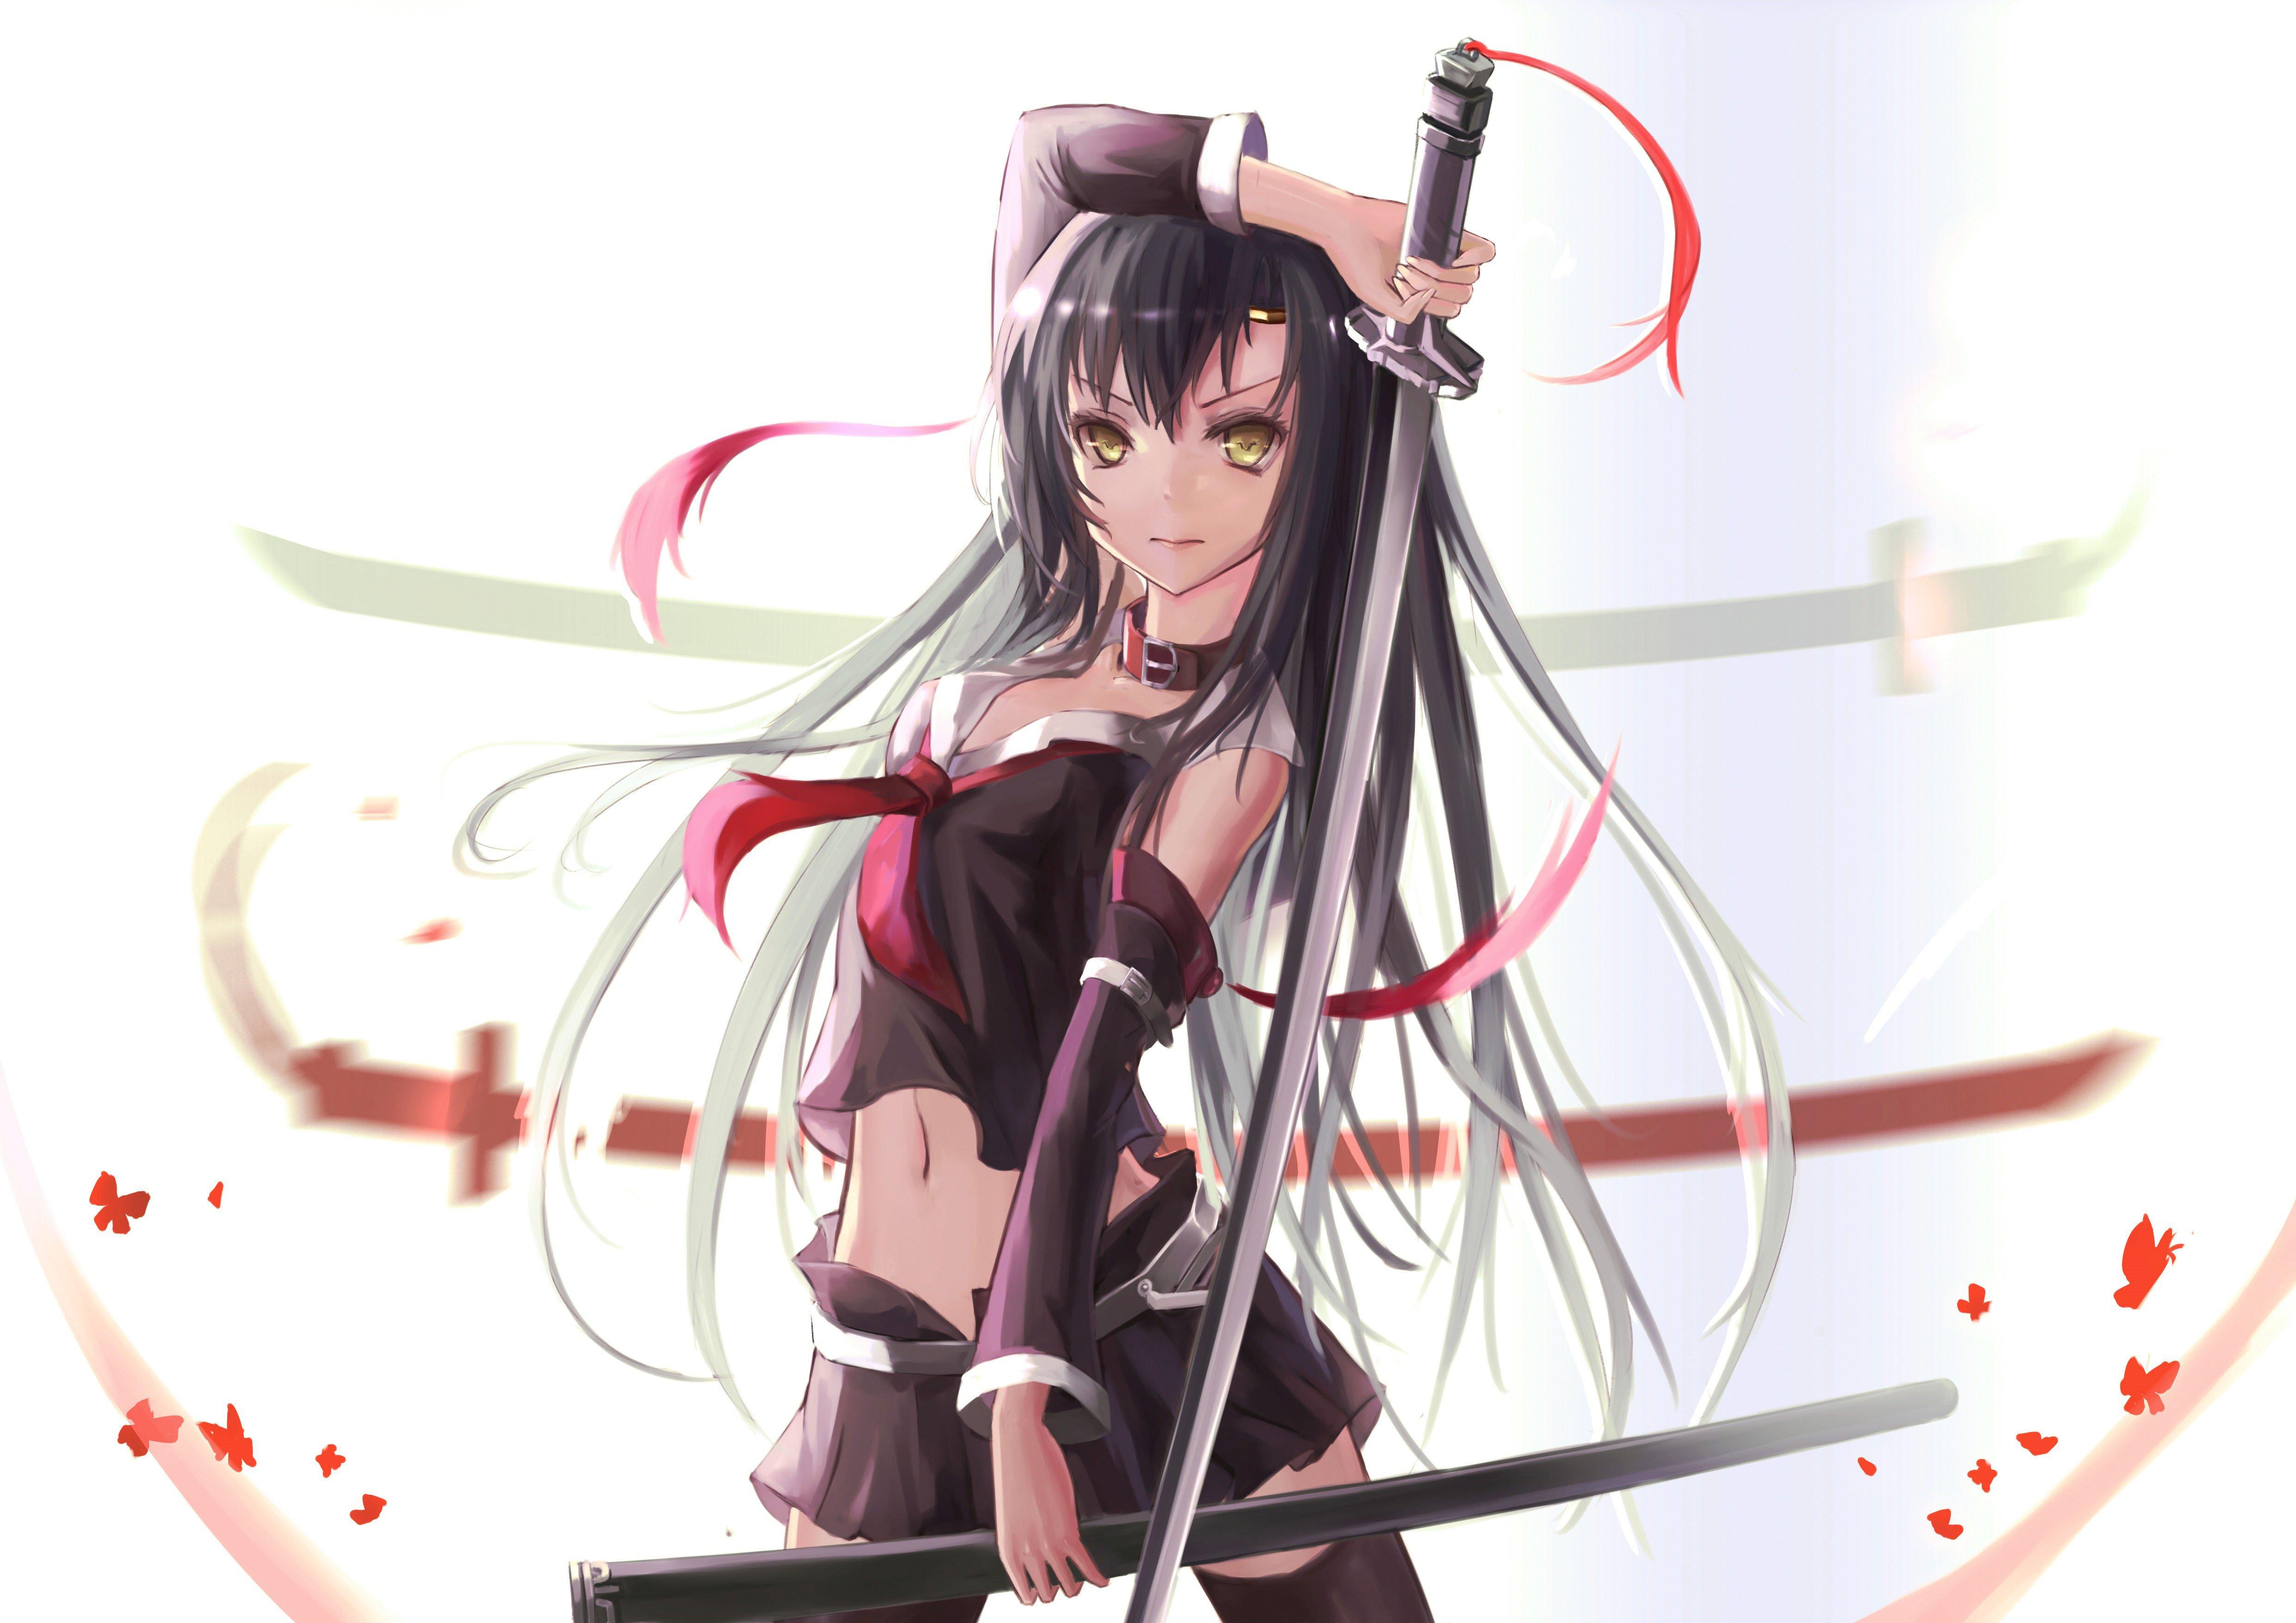 Sexy and Beautiful Anime Samurai Girl by Uptrendish